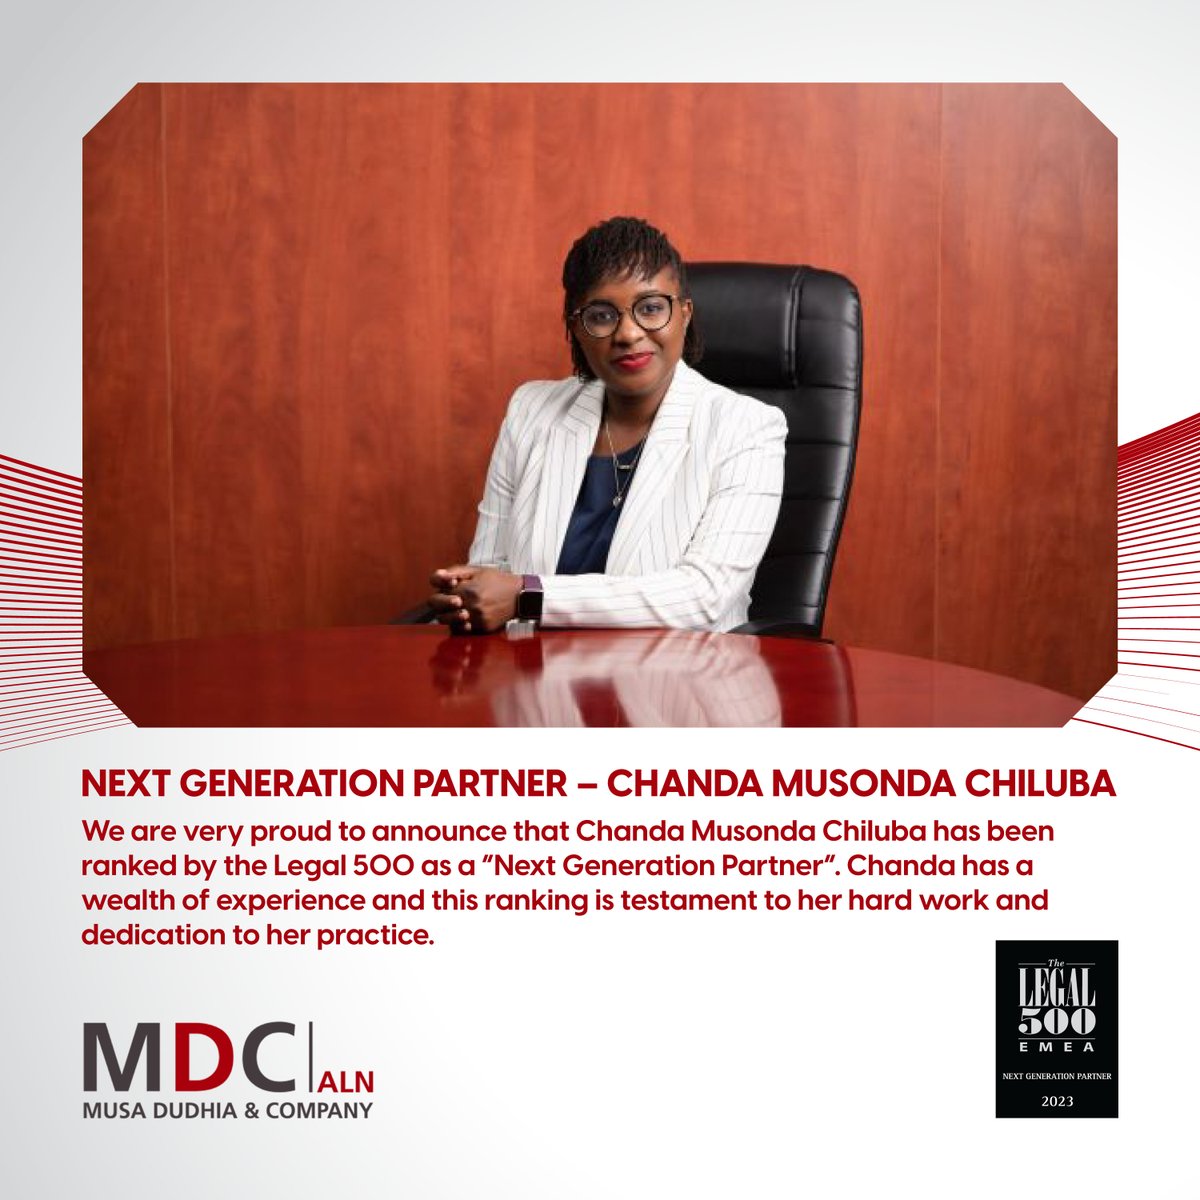 #MDC #Legal500 #NextGenerationPartner